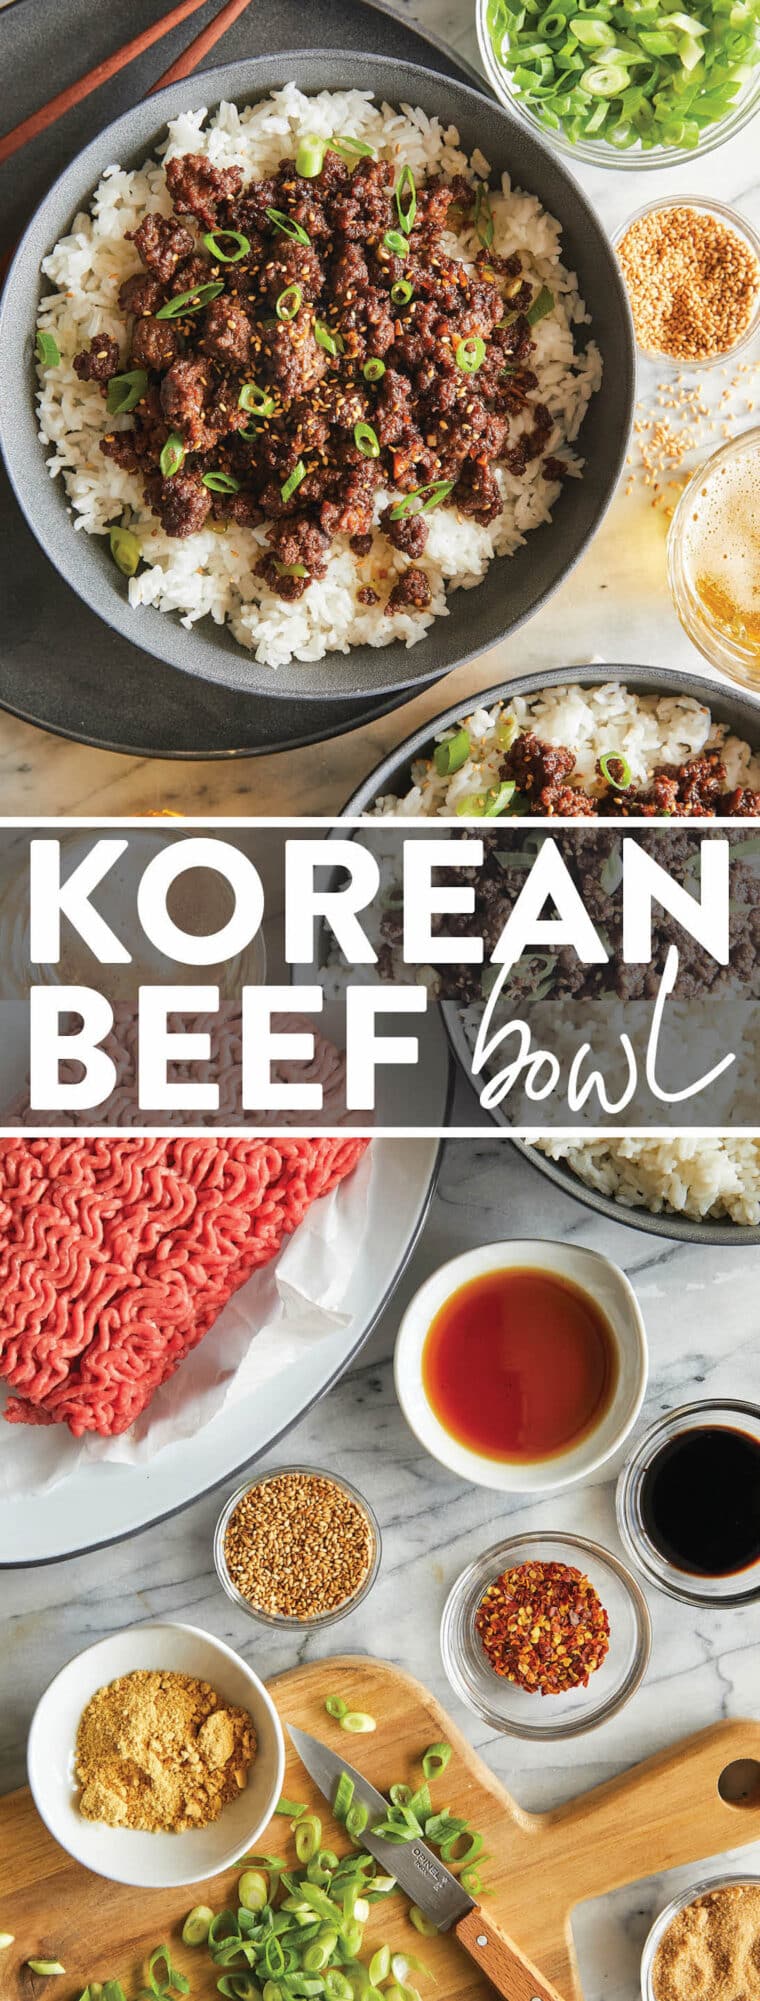 https://s23209.pcdn.co/wp-content/uploads/2013/07/Korean-Beef-Bowl-1-760x2001.jpg